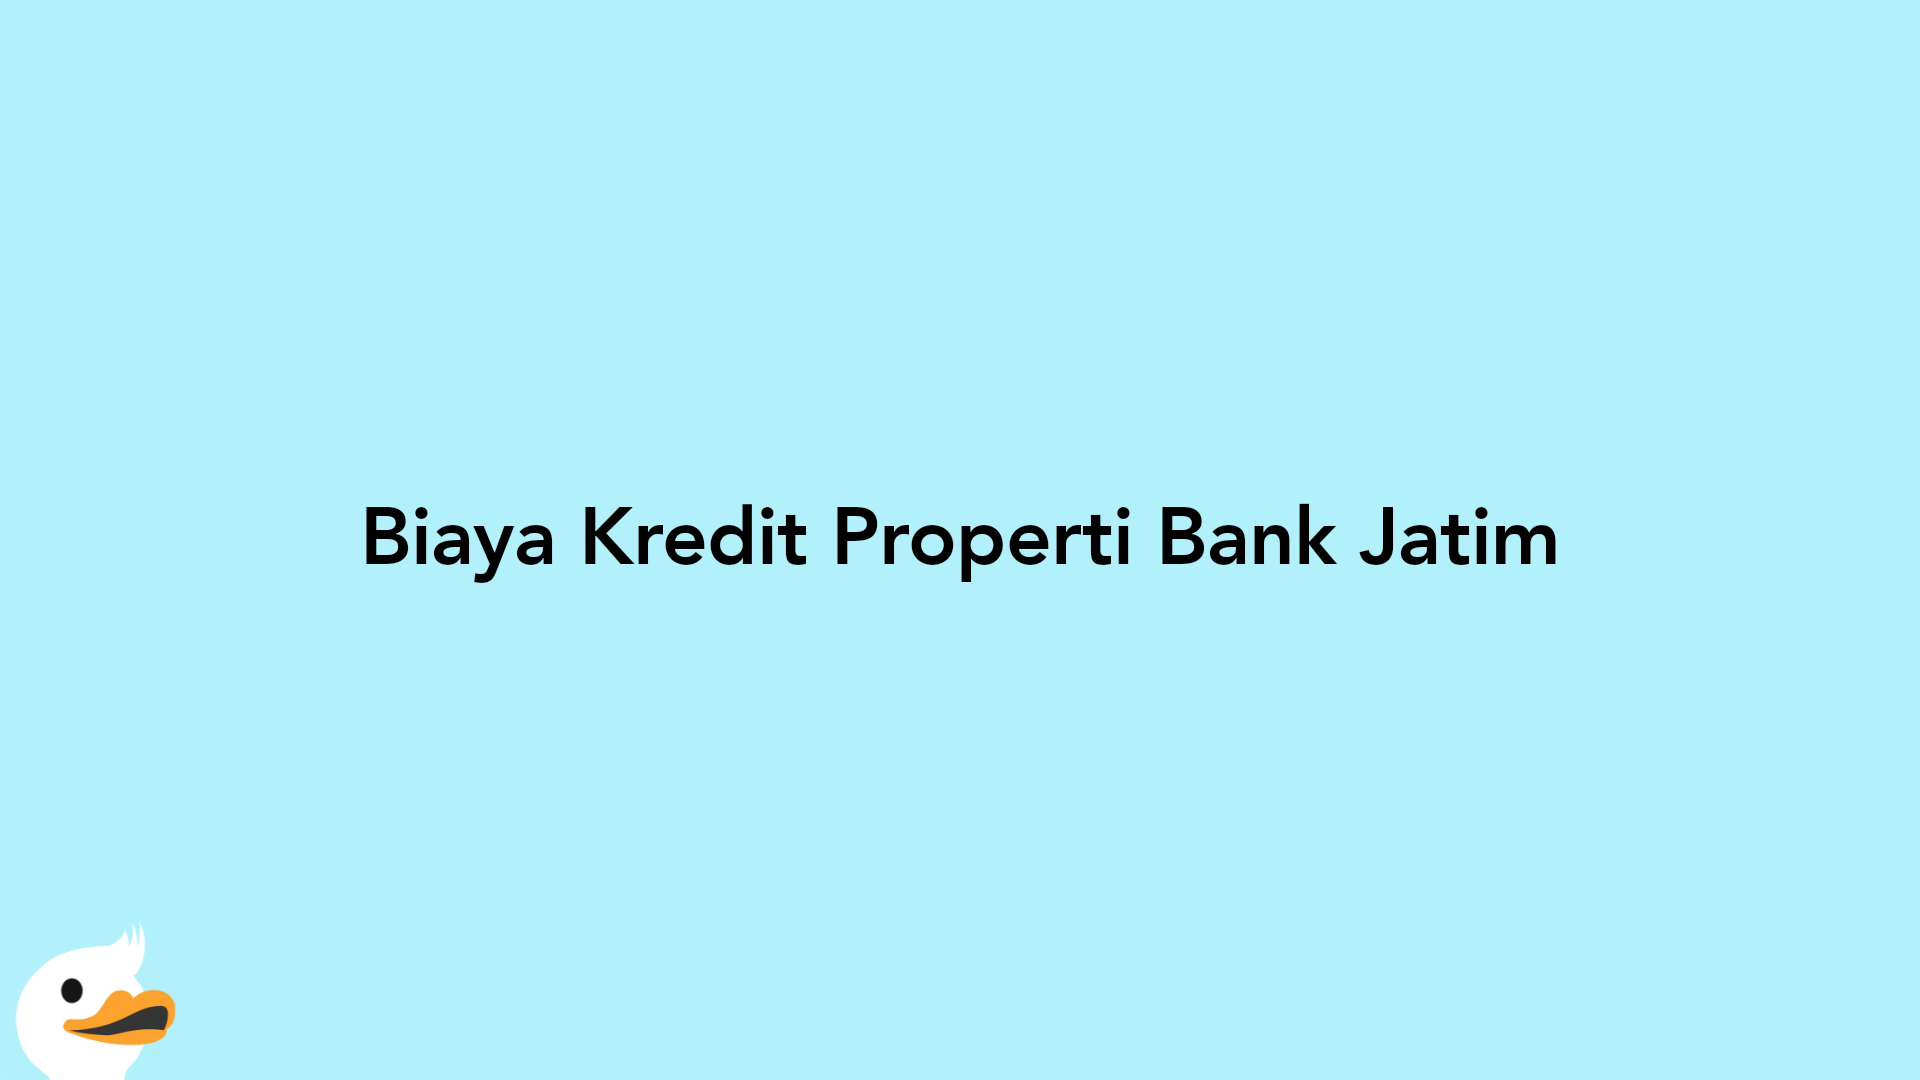 Biaya Kredit Properti Bank Jatim